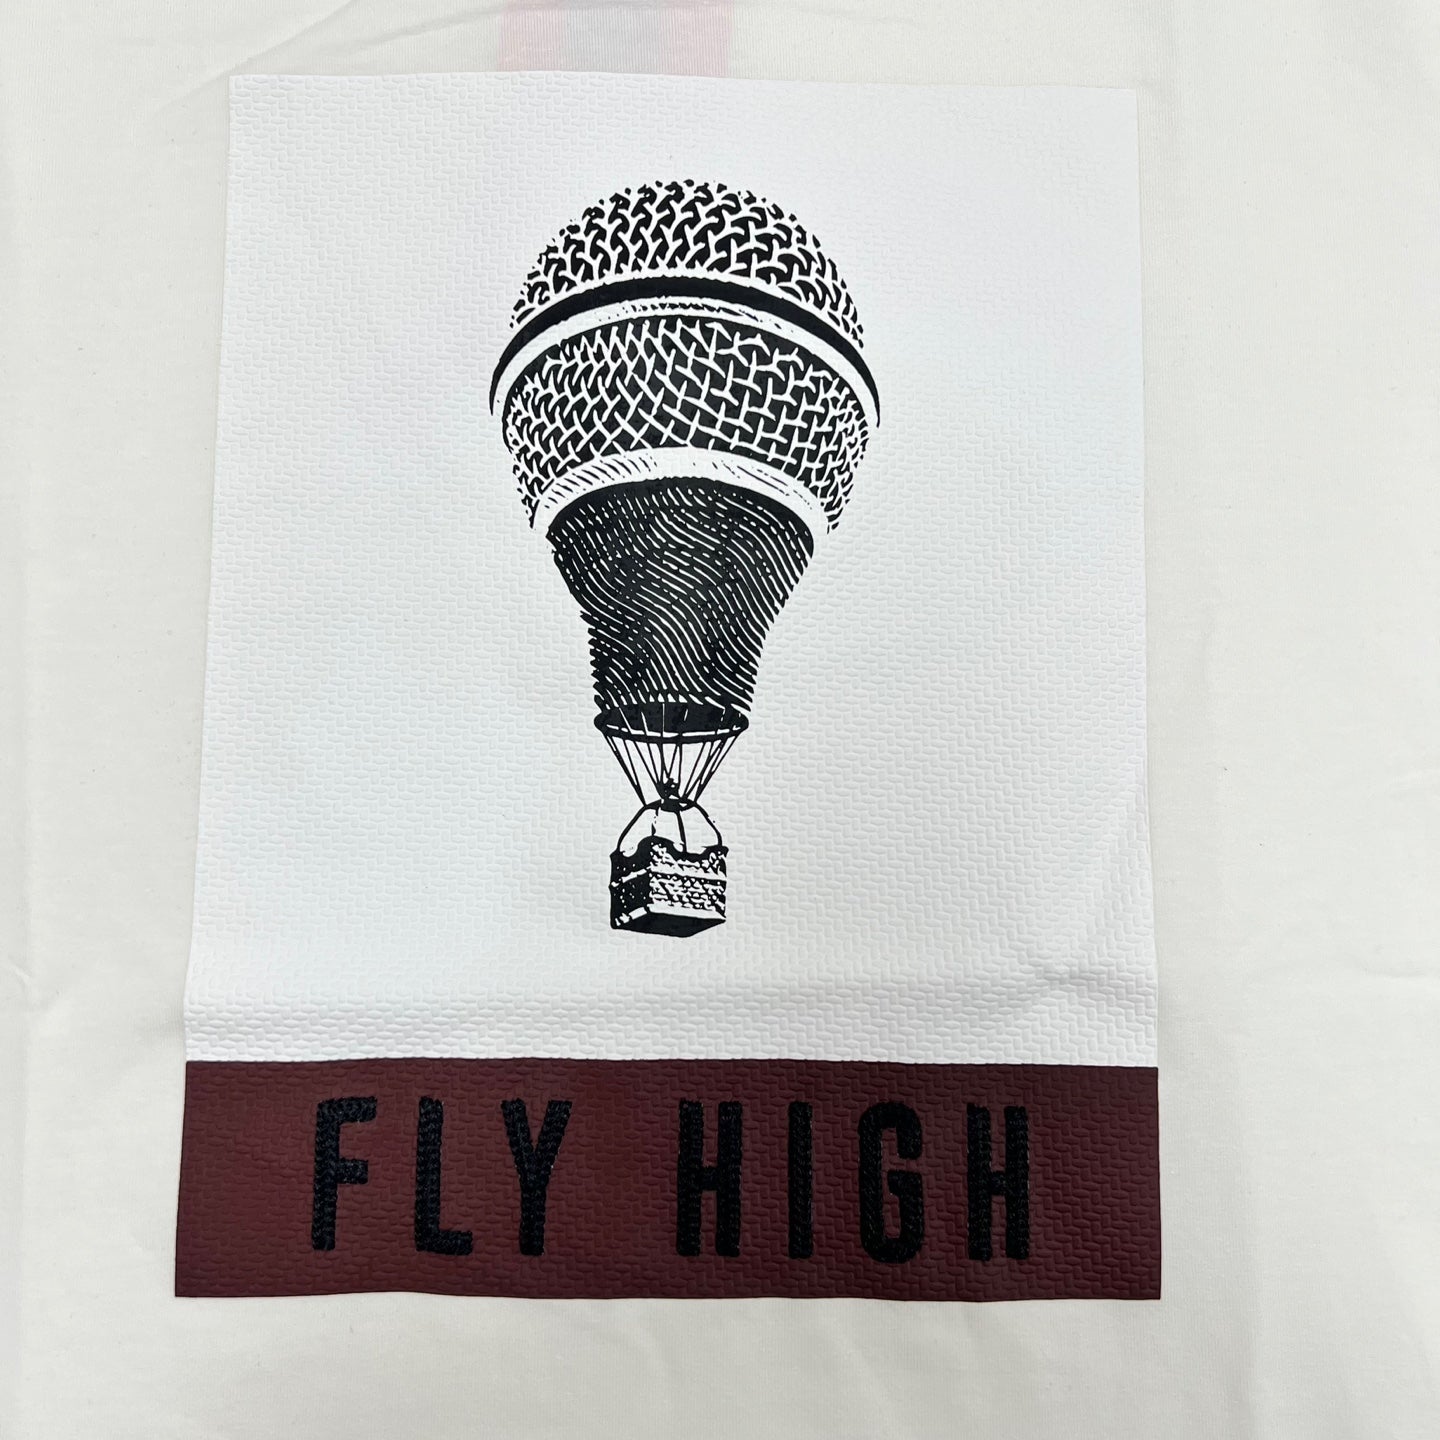 FIFTH LOOP Fly High Graphic T-Shirt - Vanilla